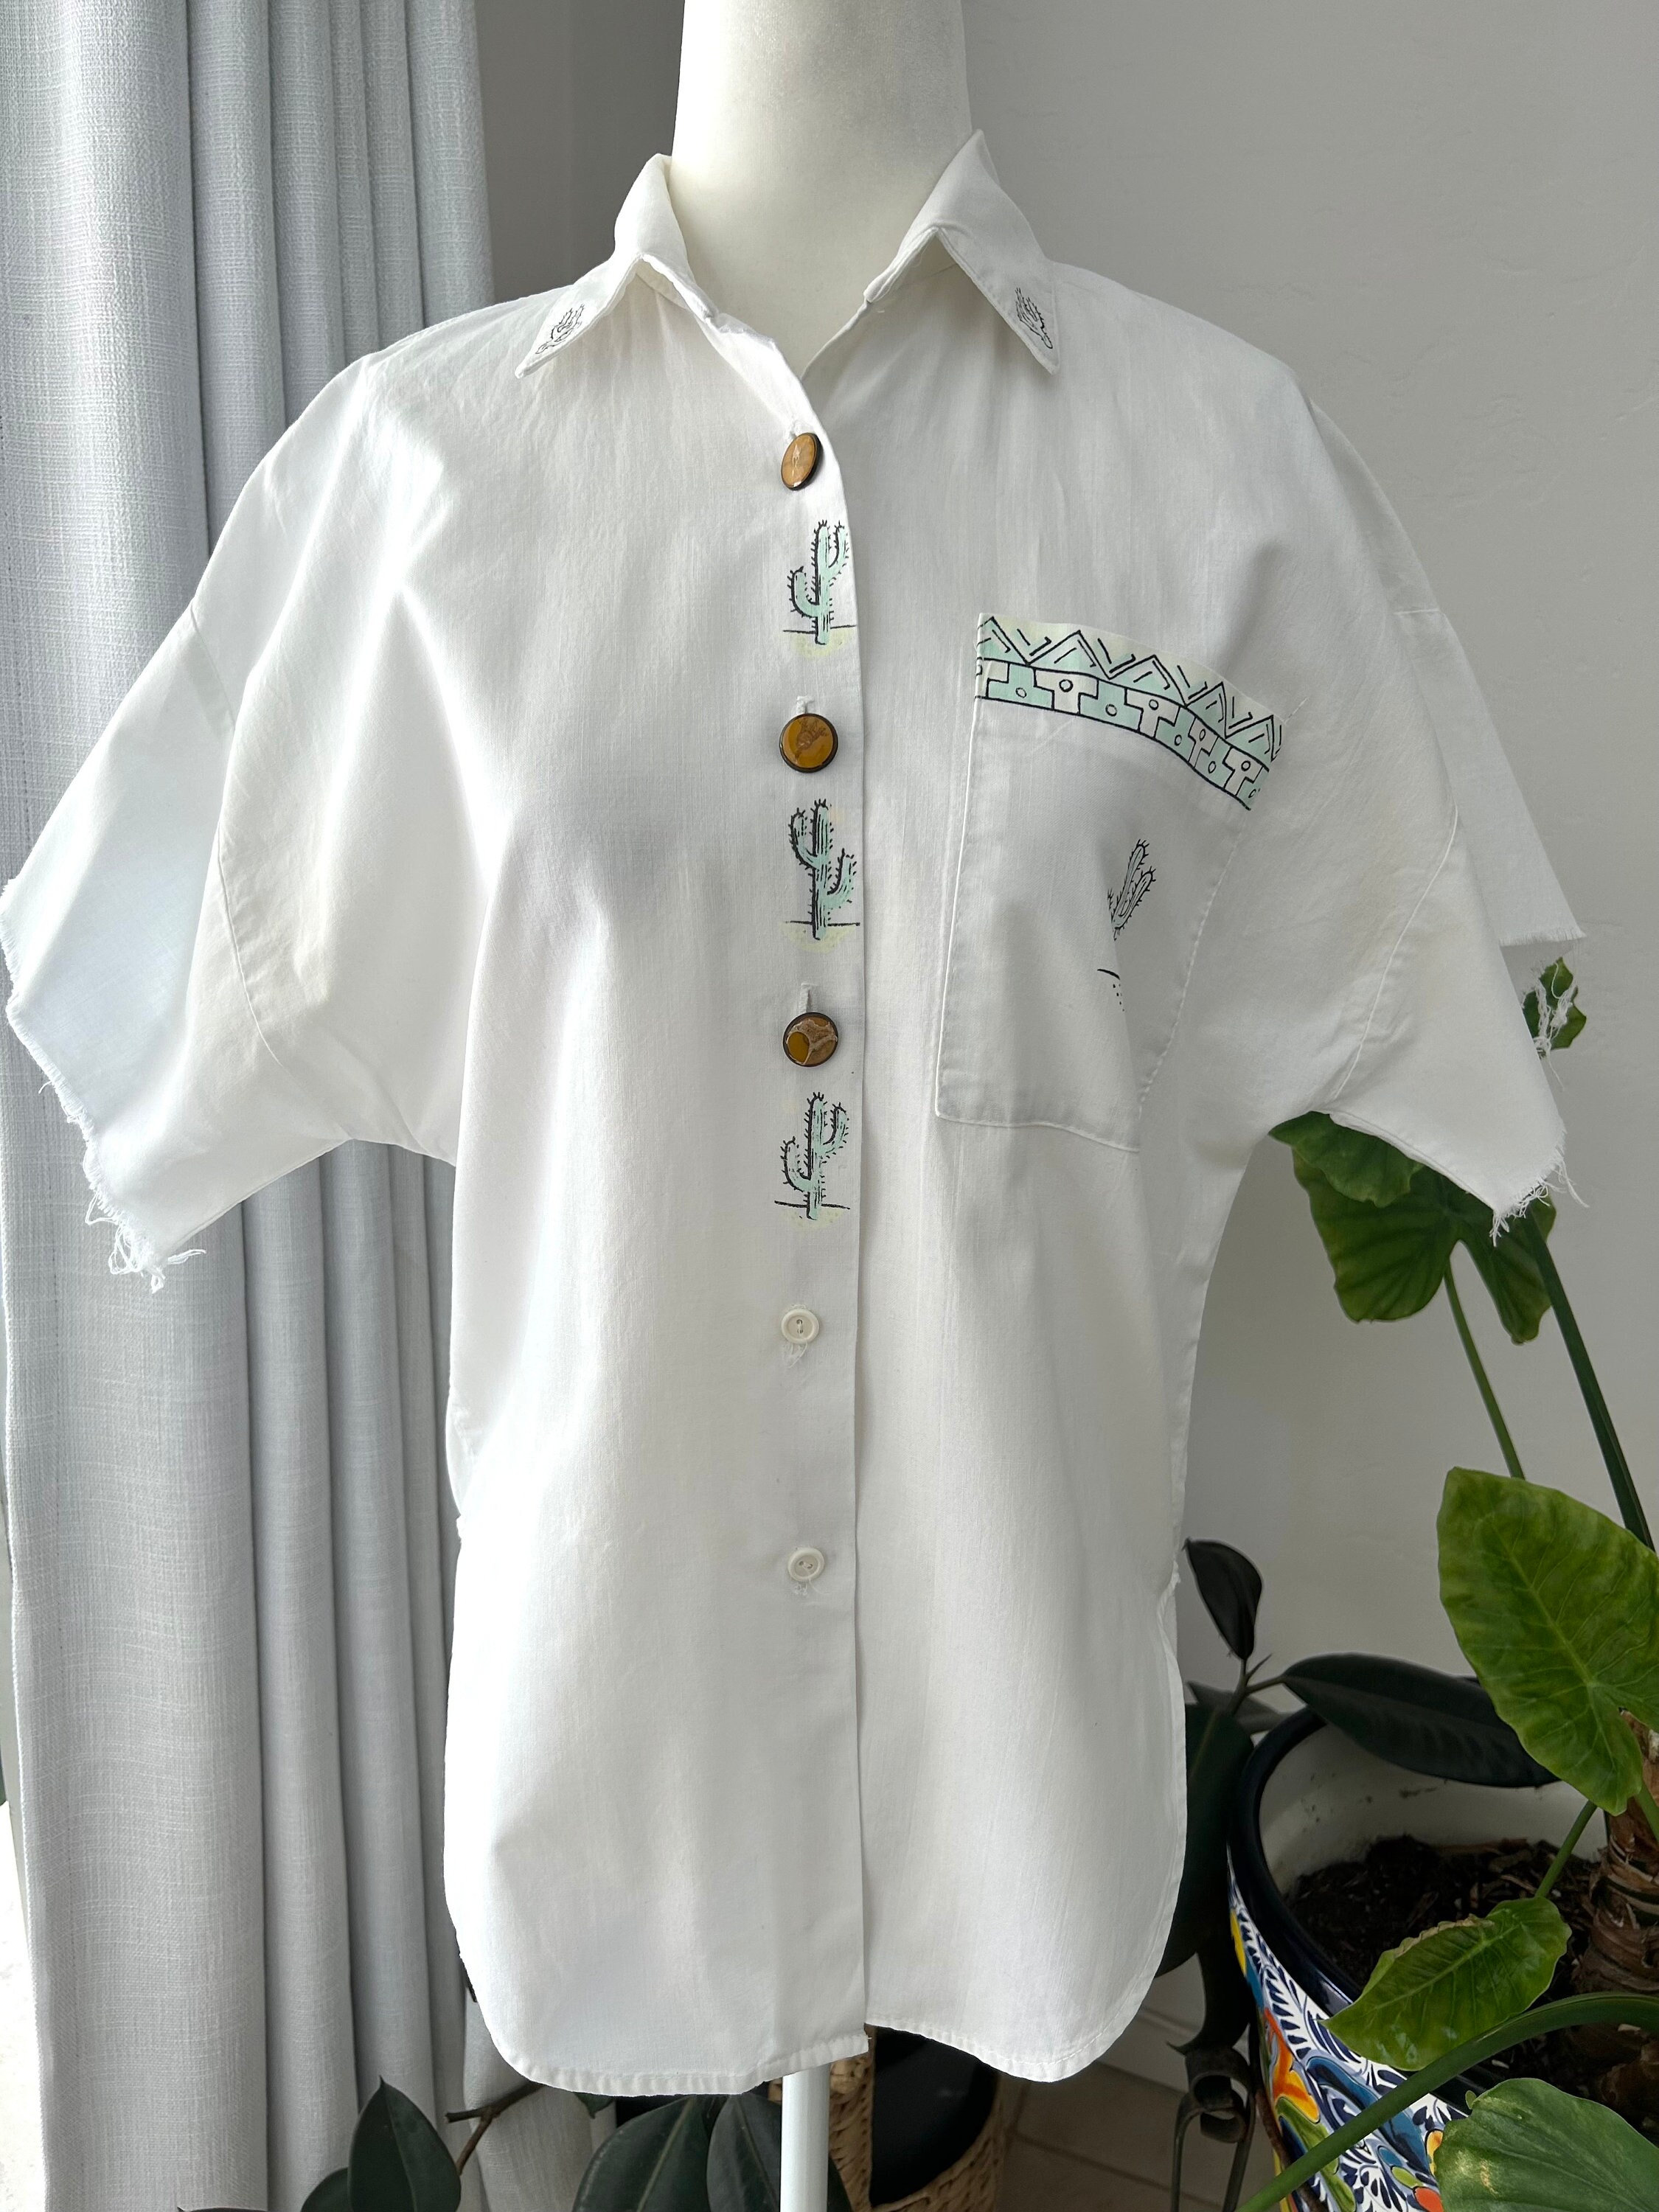 Cactus Button up Style Shirt, Fantasy Shirt, Cute Succulent